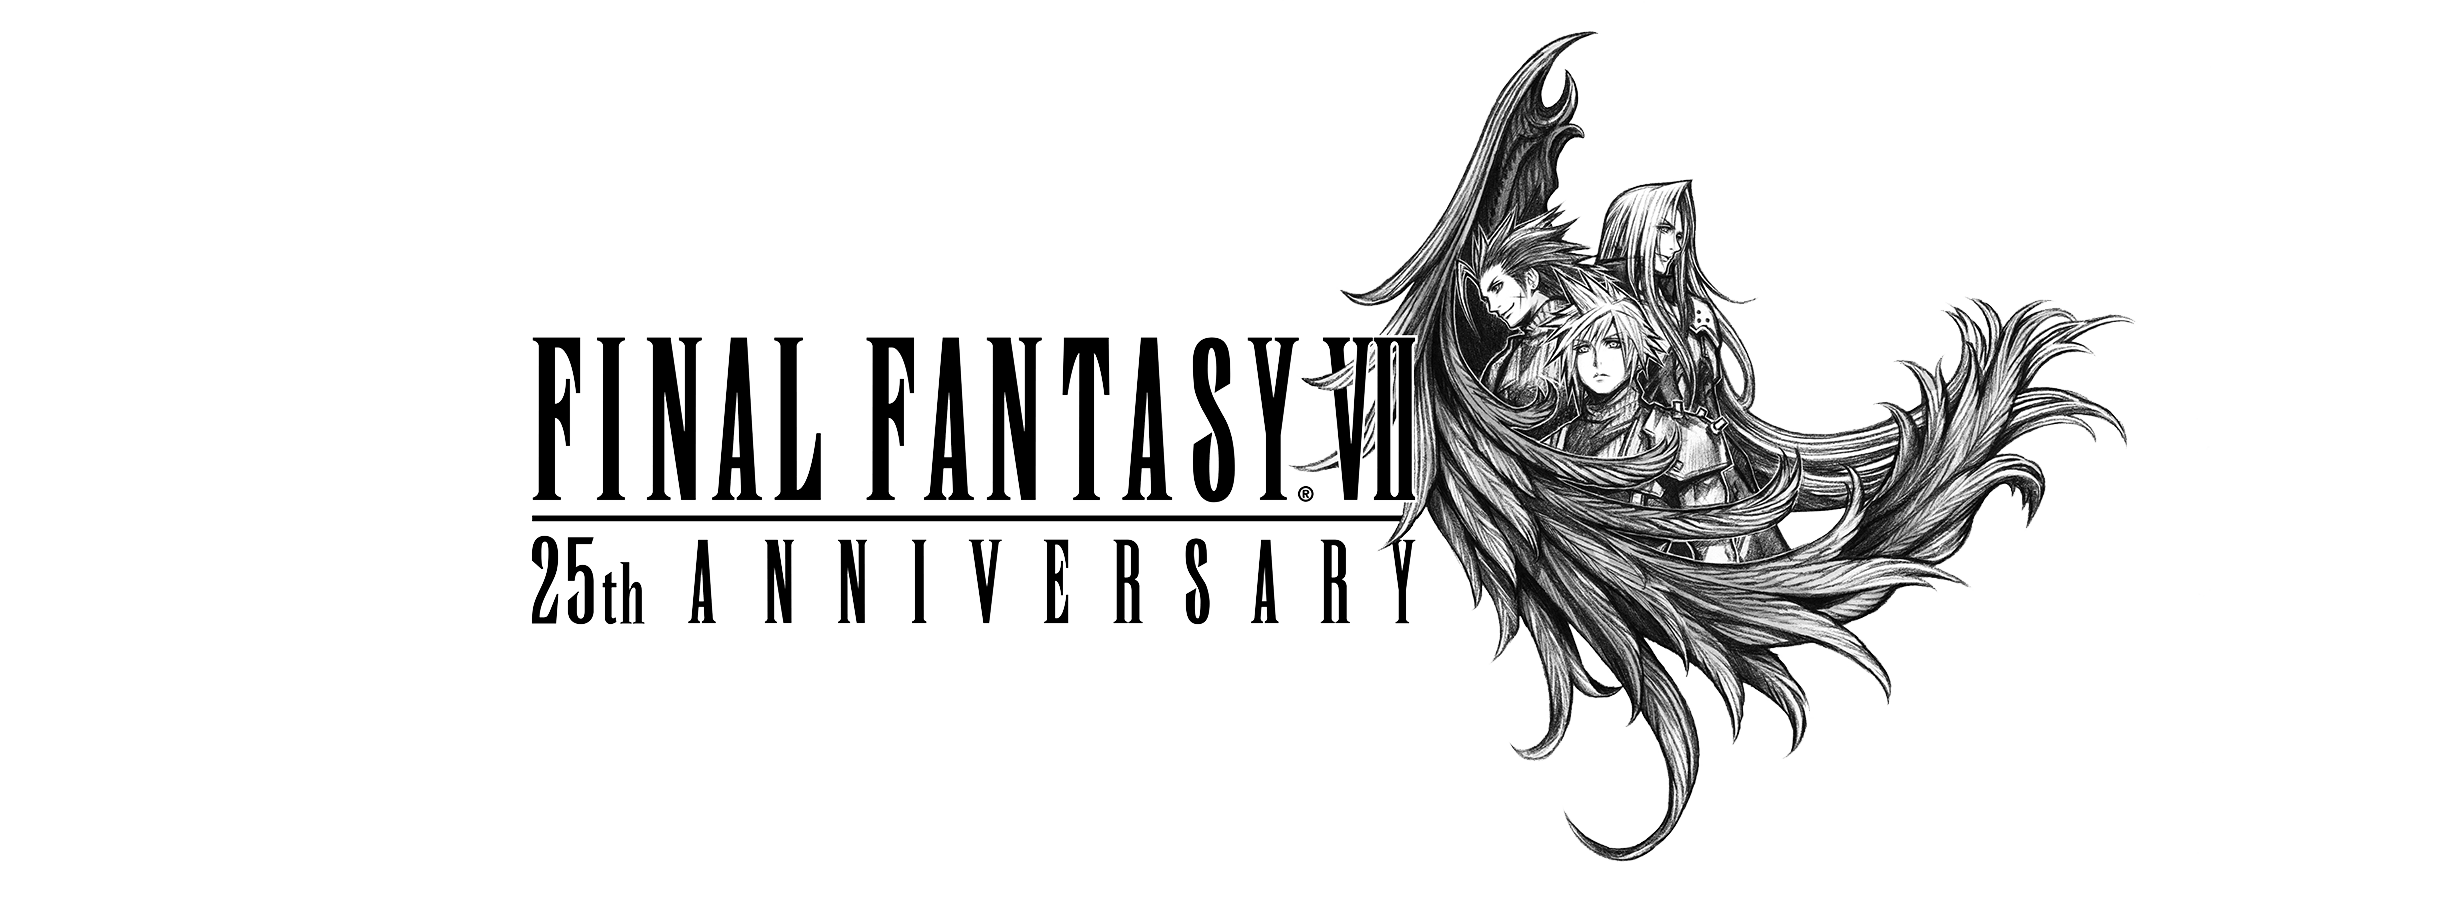 final fantasy 7 25th anniversary logo